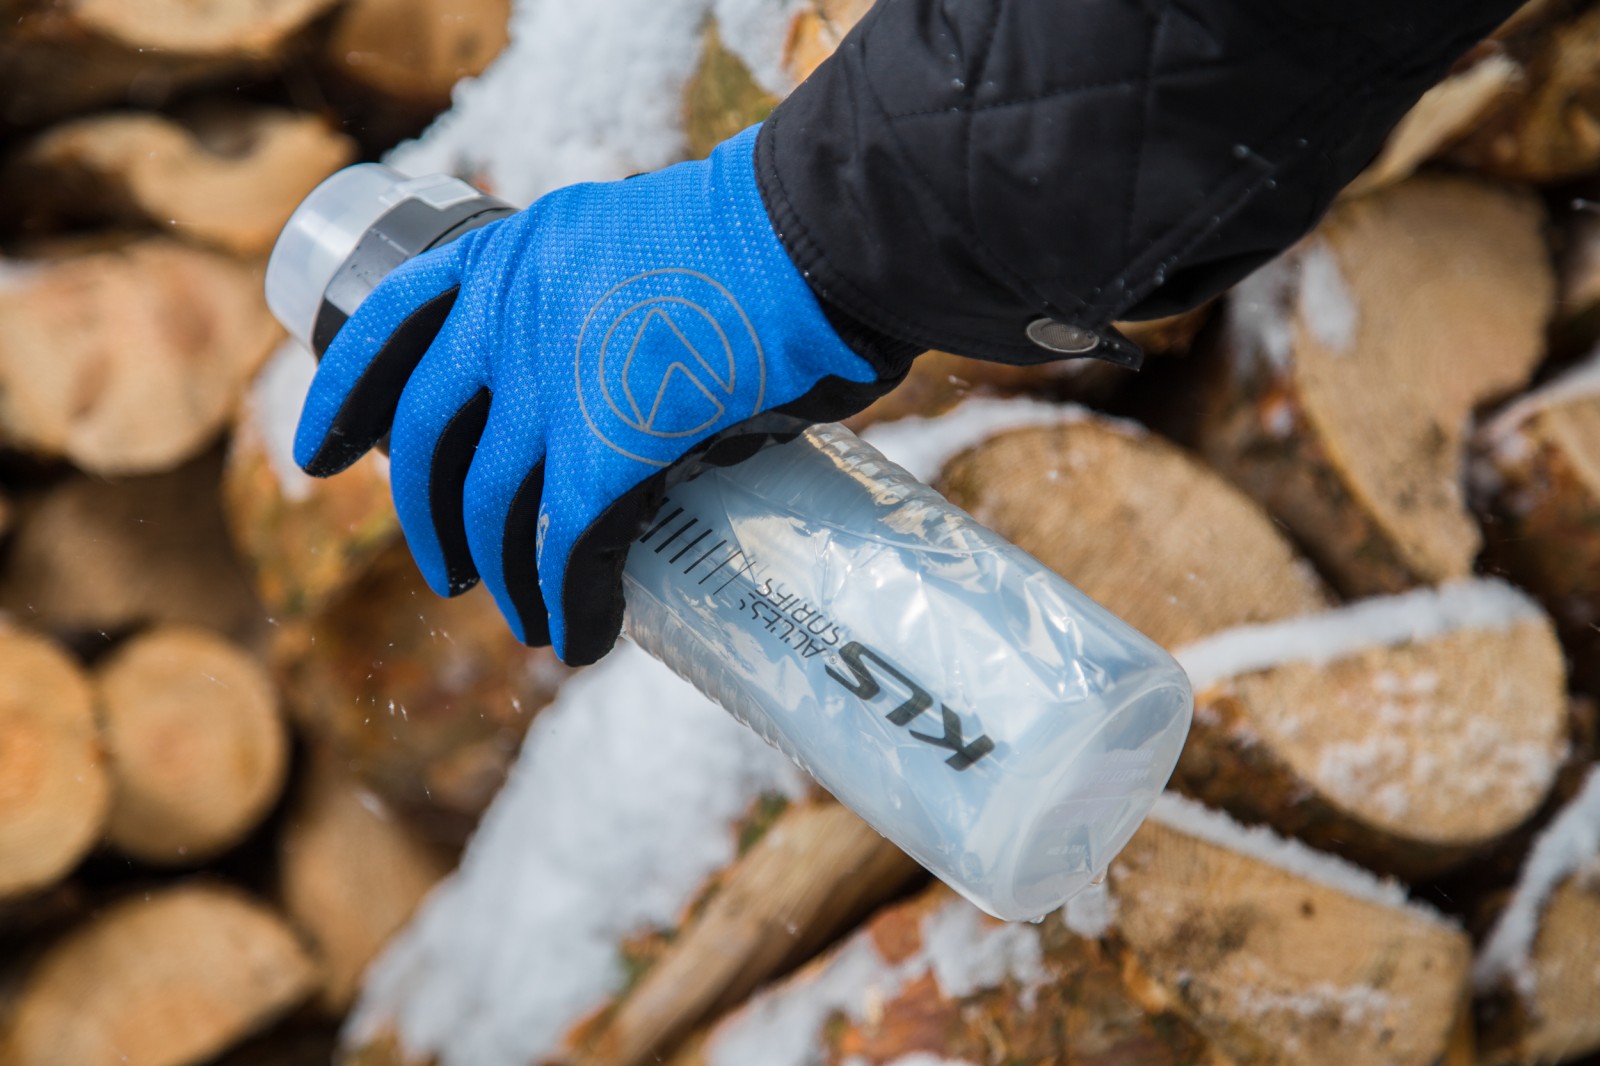 обзор зимних перчаток KLS Frosty